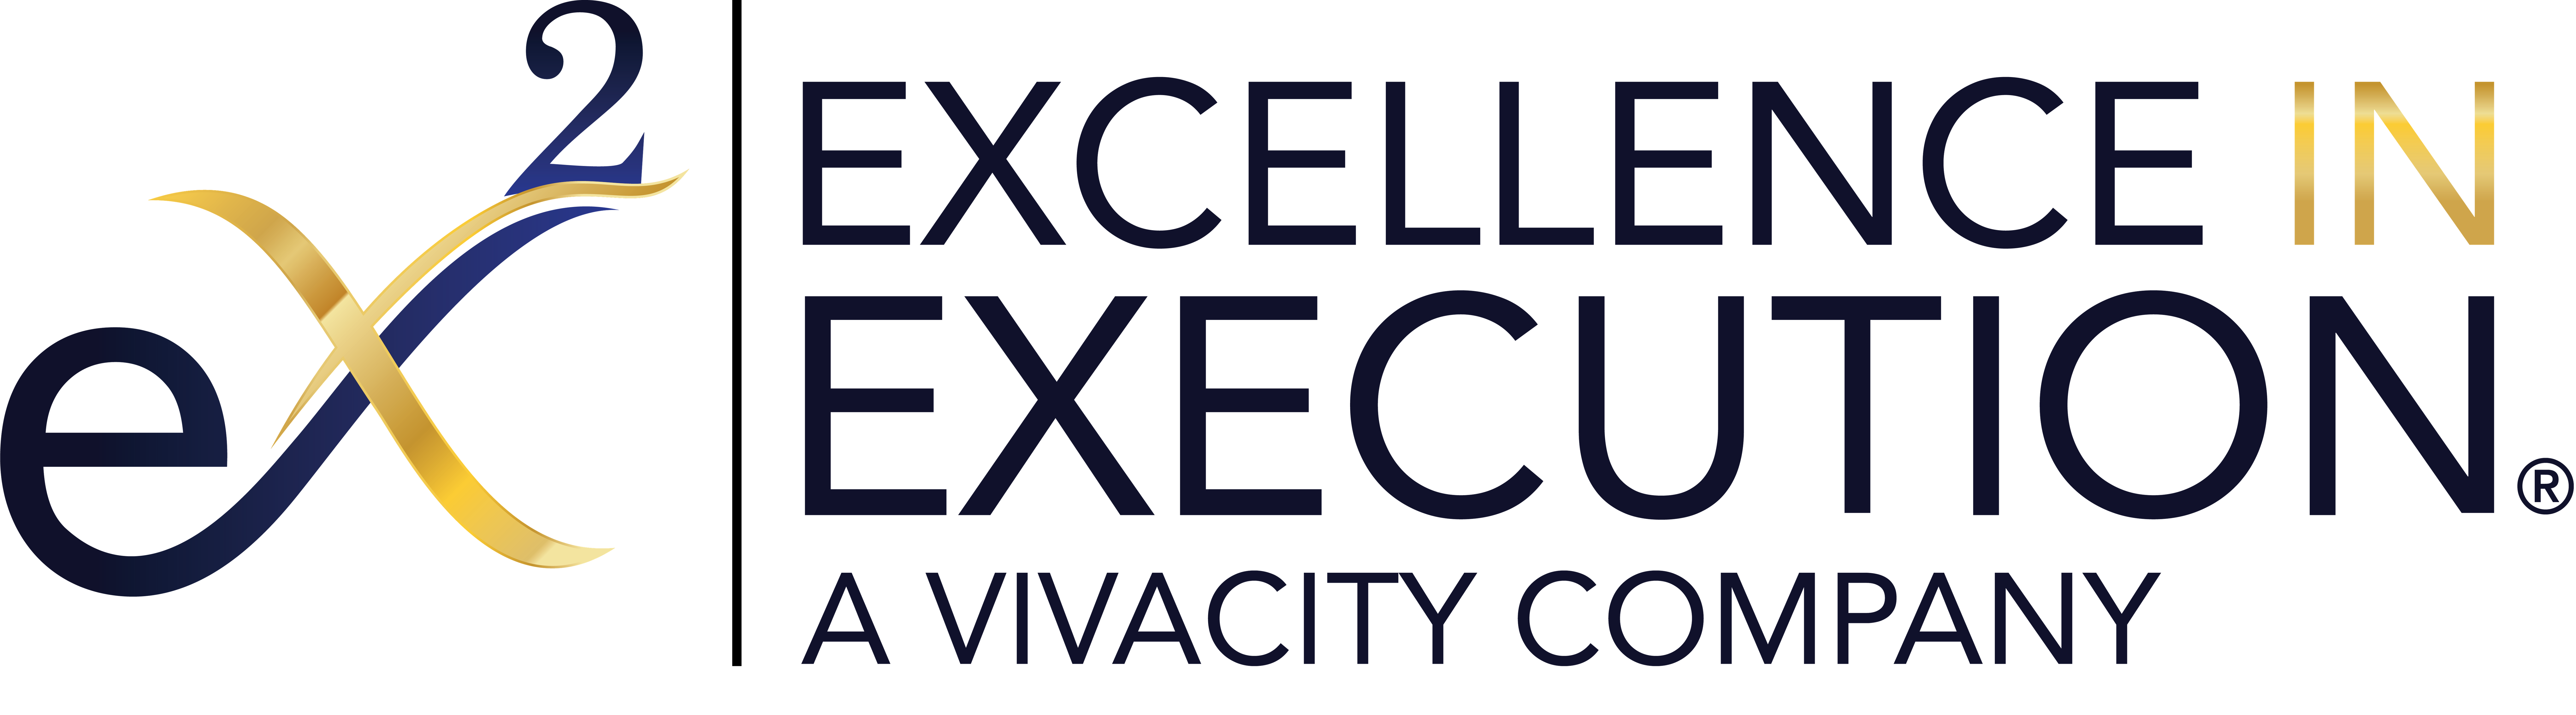 ex2 a vivacity company